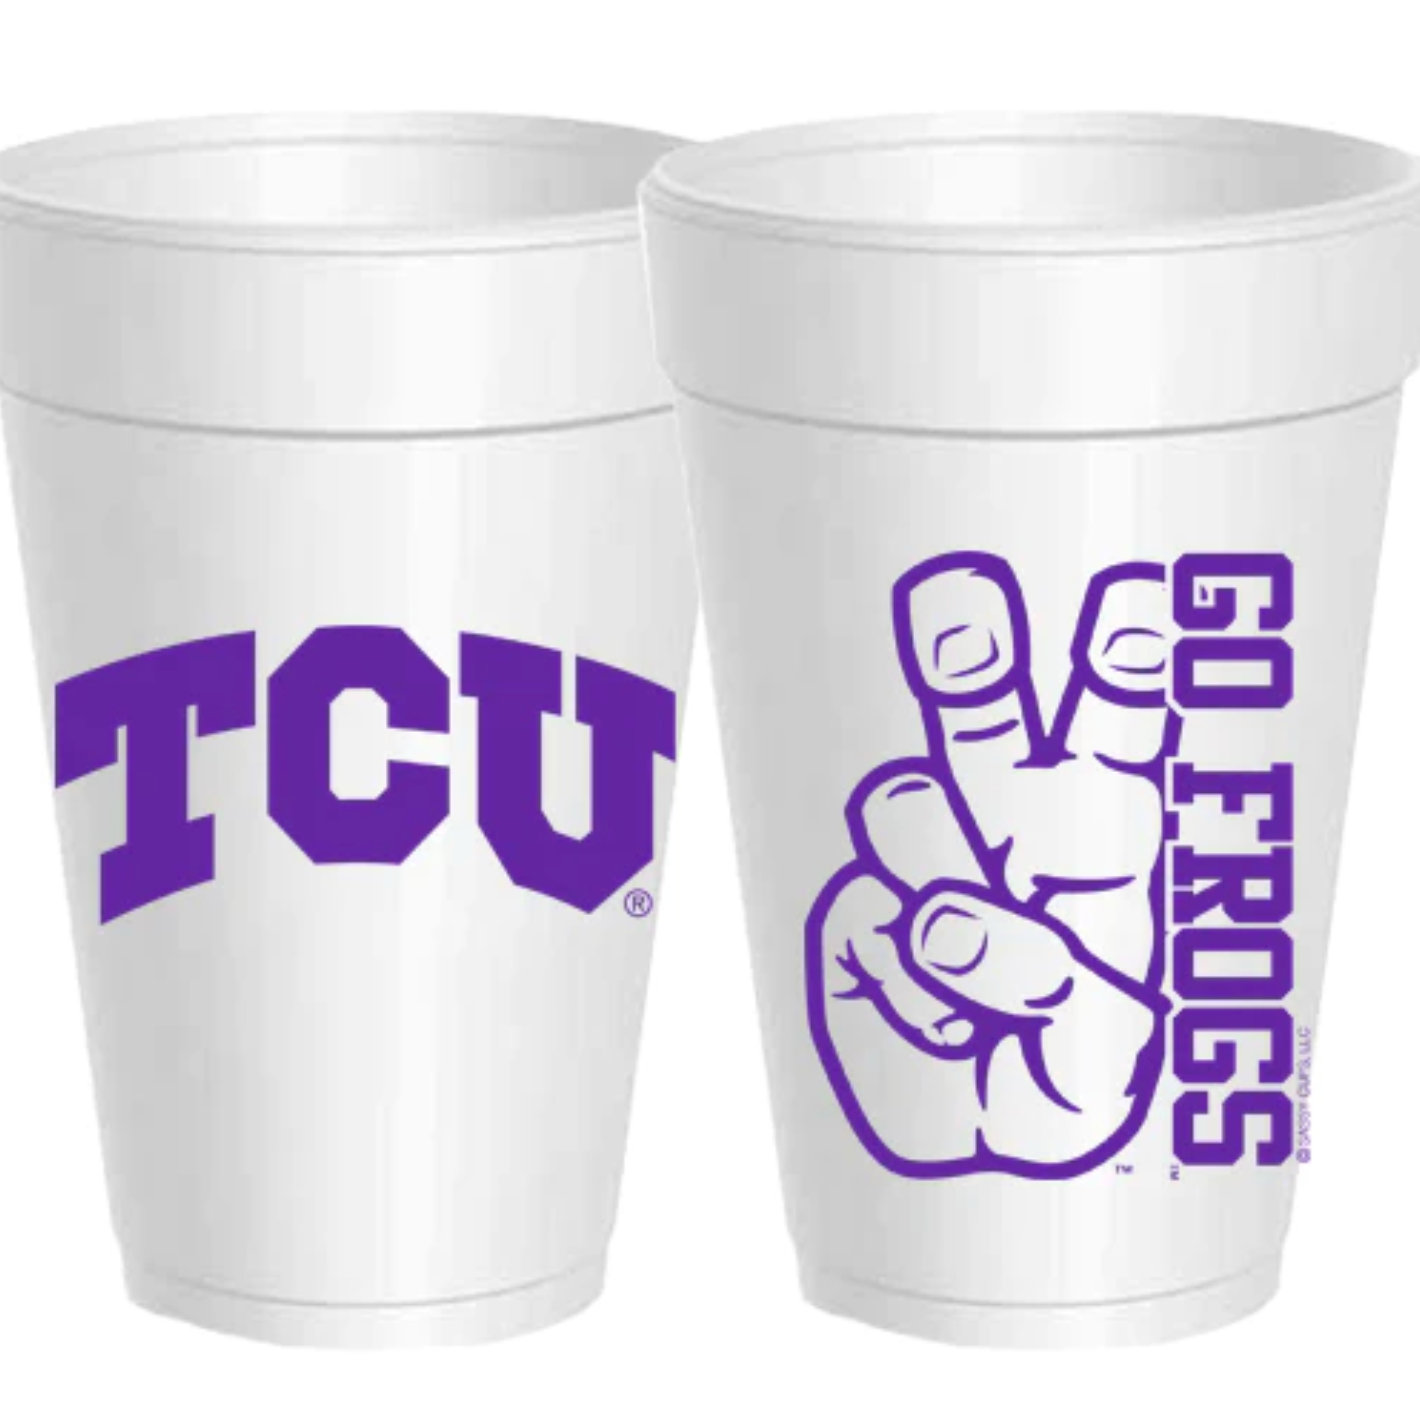 TCU- Go Frogs Styrofoam Cups